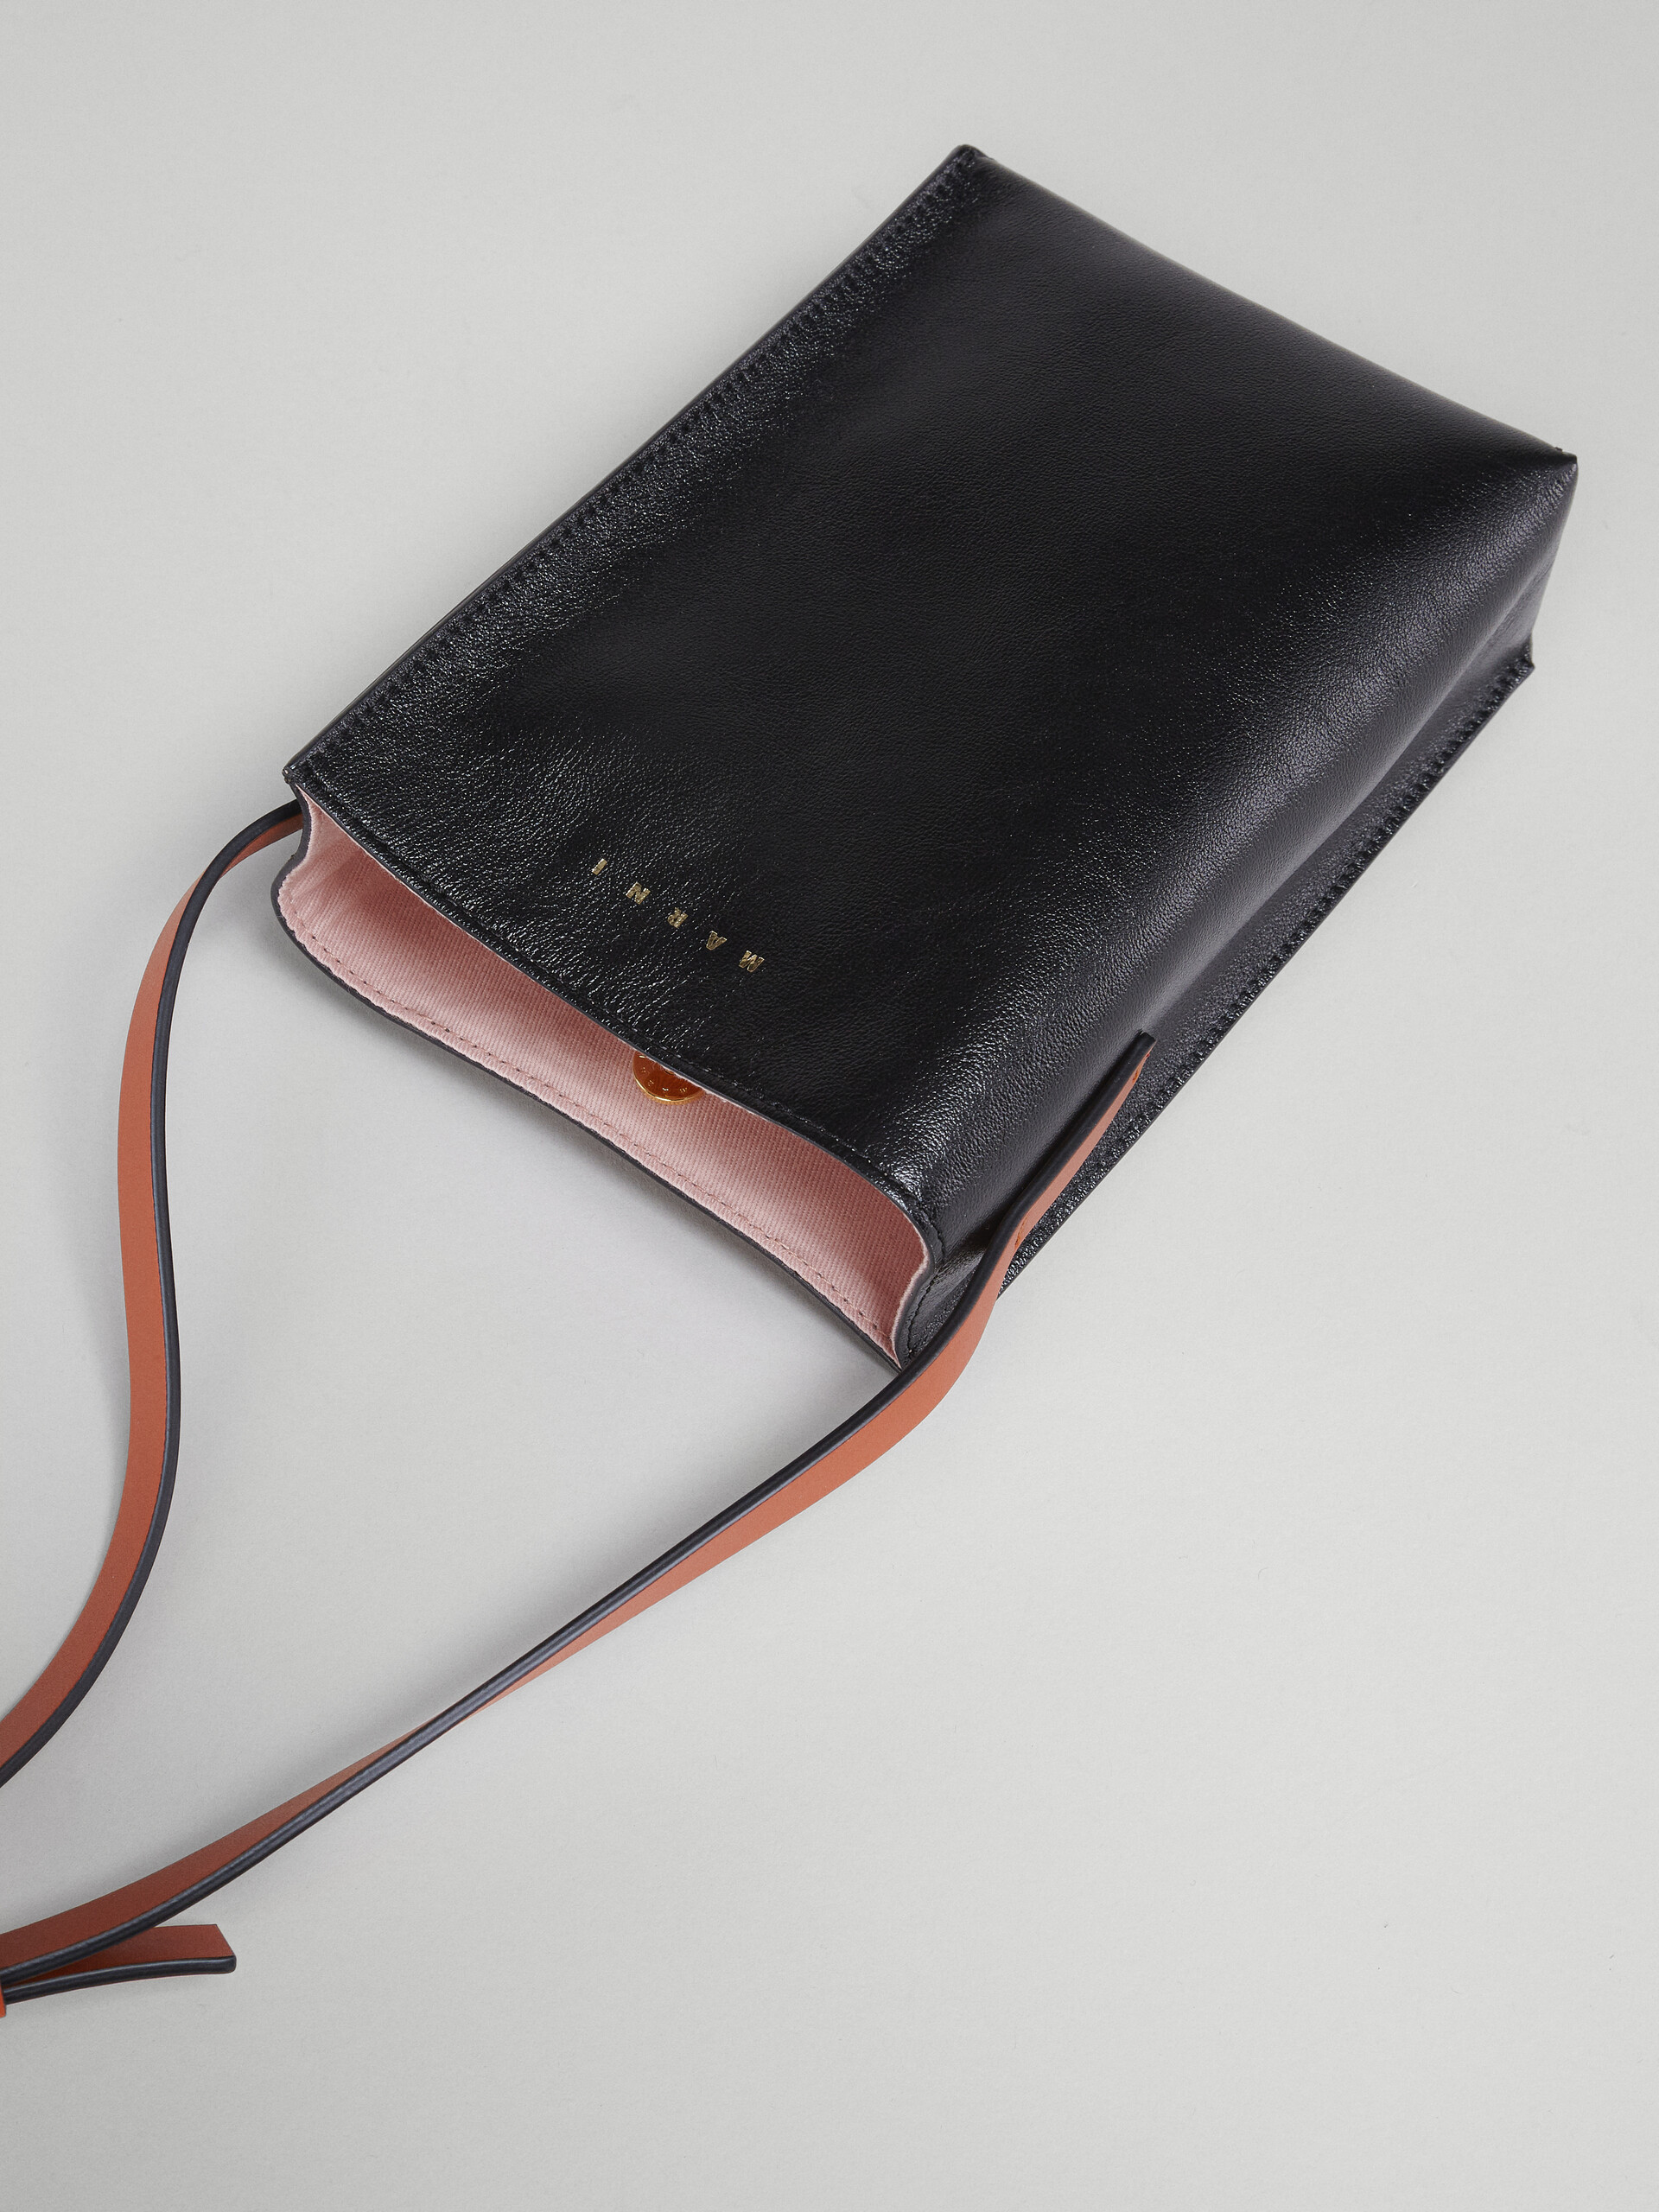 Museo Soft Nano Bag in black and grey leather - Shoulder Bag - Image 4